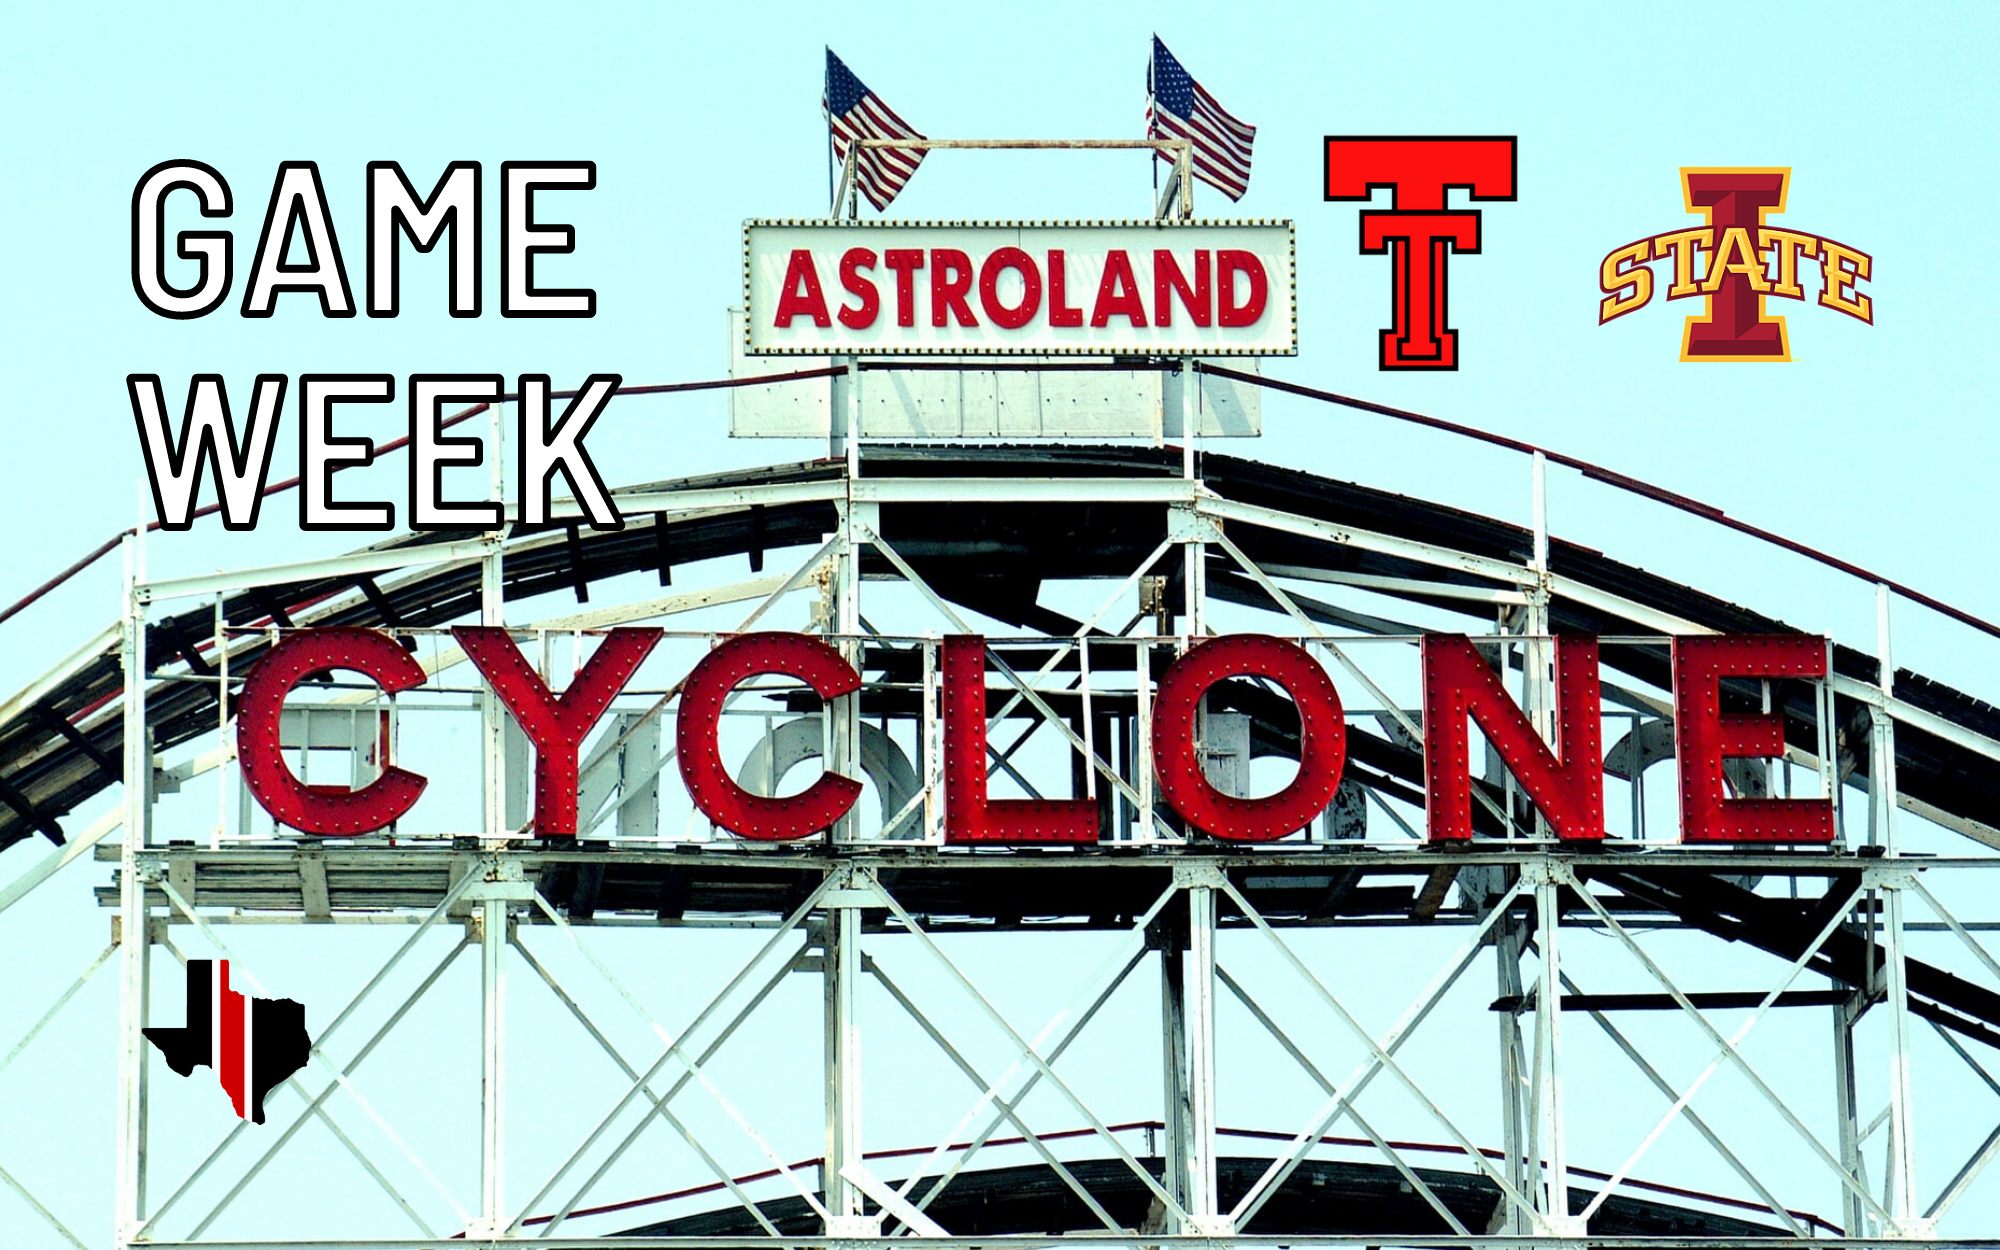 Game Week: Texas Tech vs. Iowa State